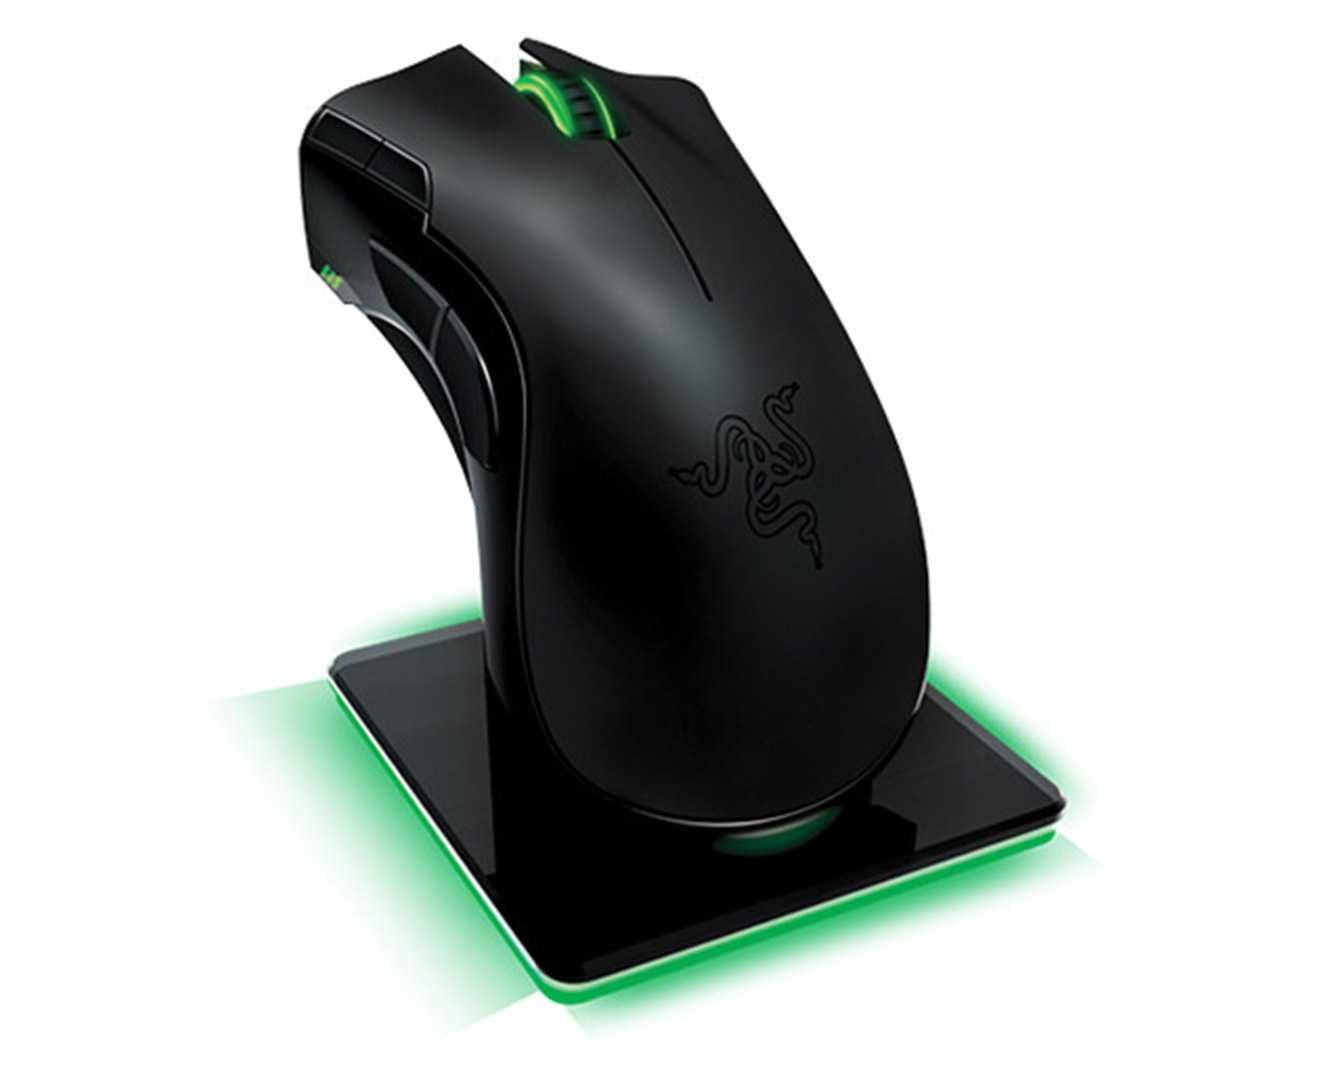 Razer mamba wireless laser gaming mouse black usb